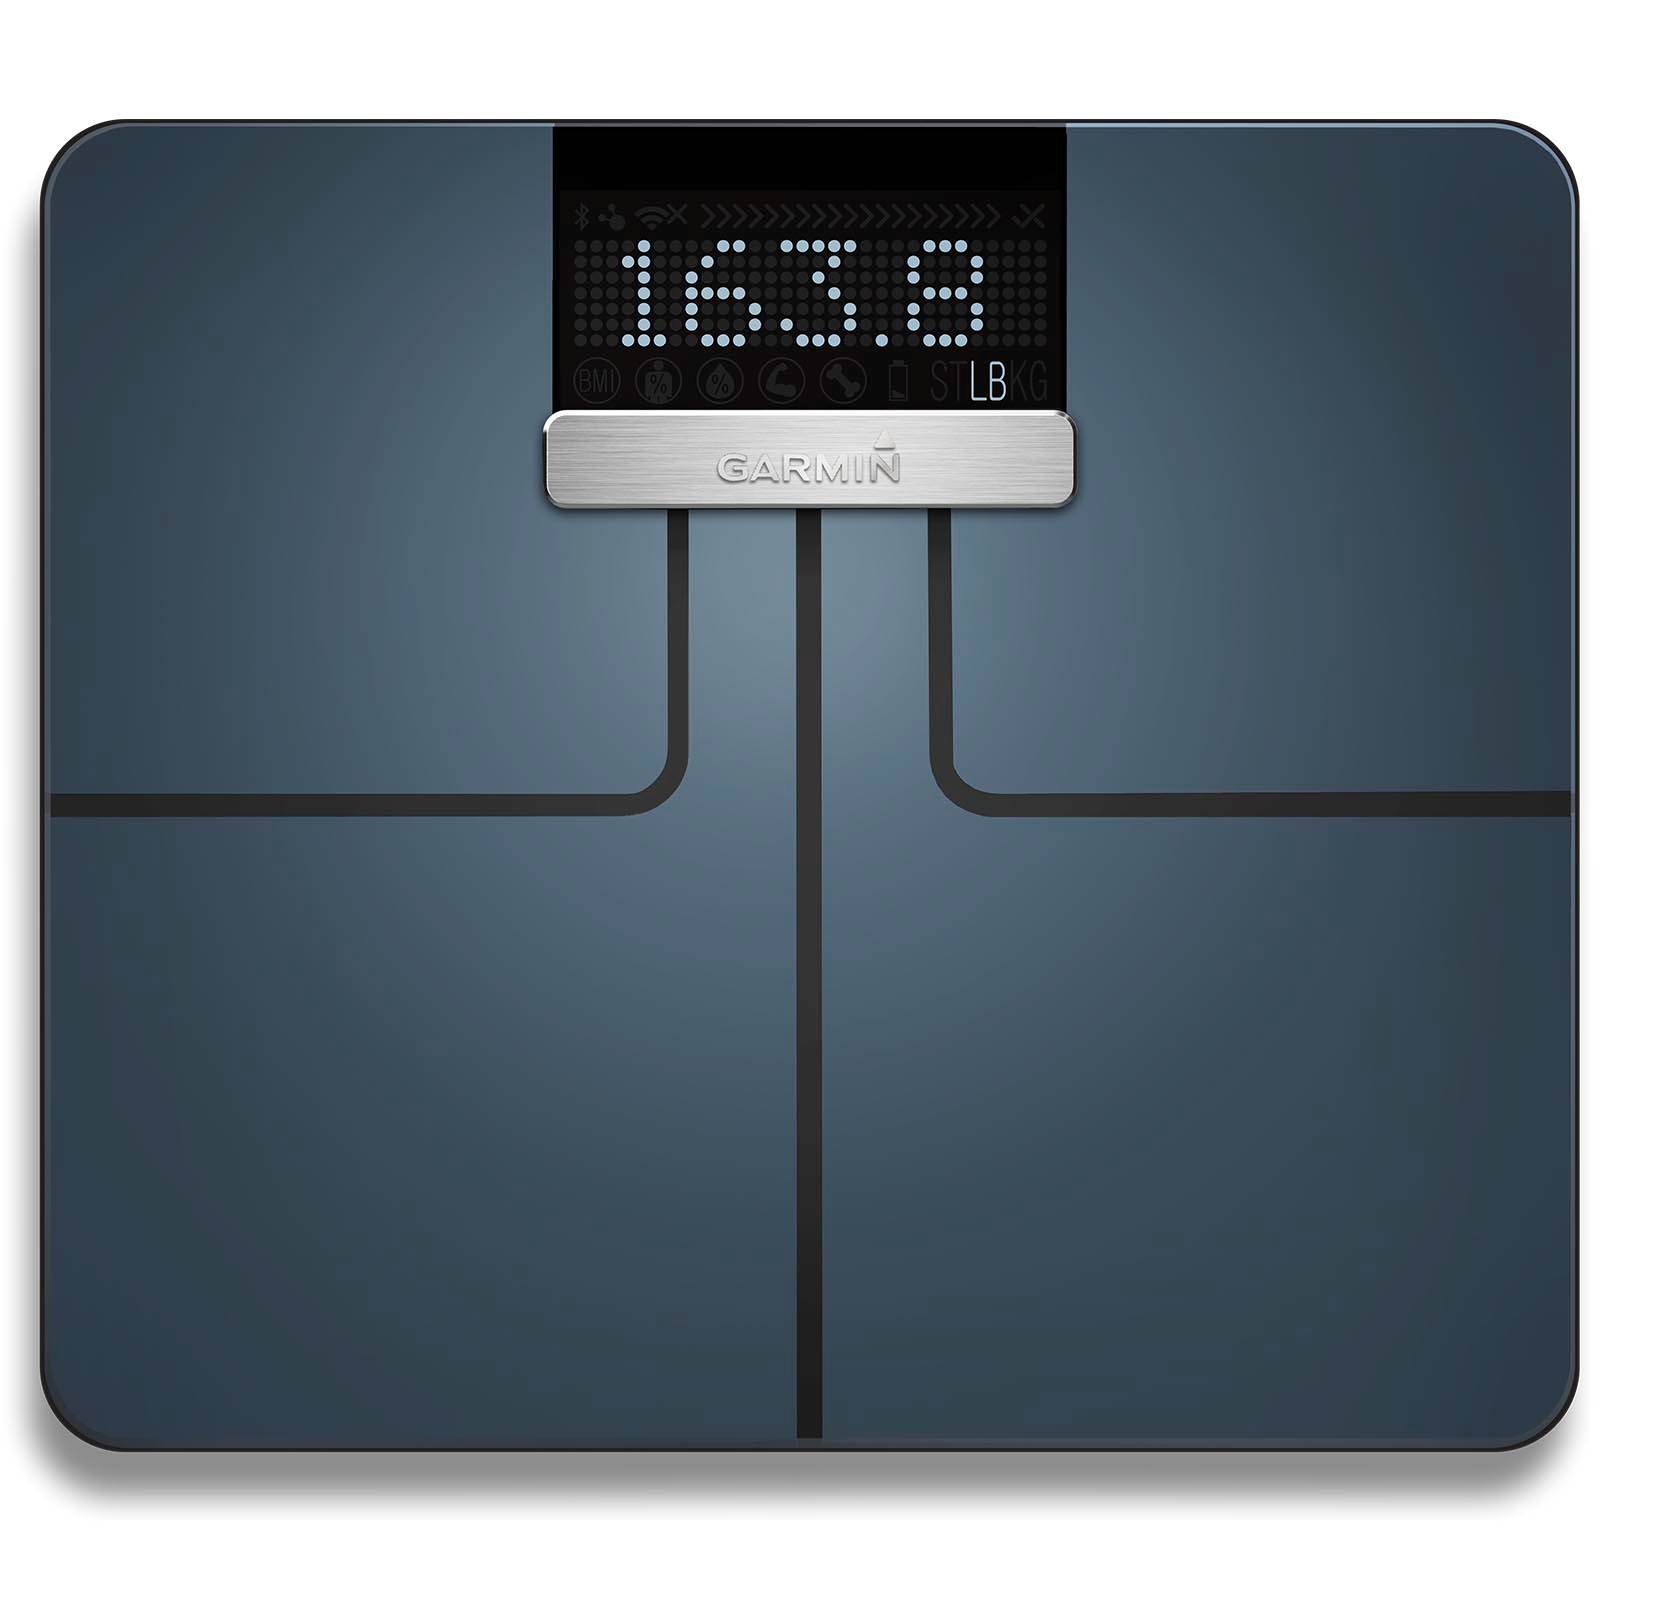 Garmin Index Smart WiFi Bluetooth BMI Calculator Digital Weight Scale, Black - image 2 of 9